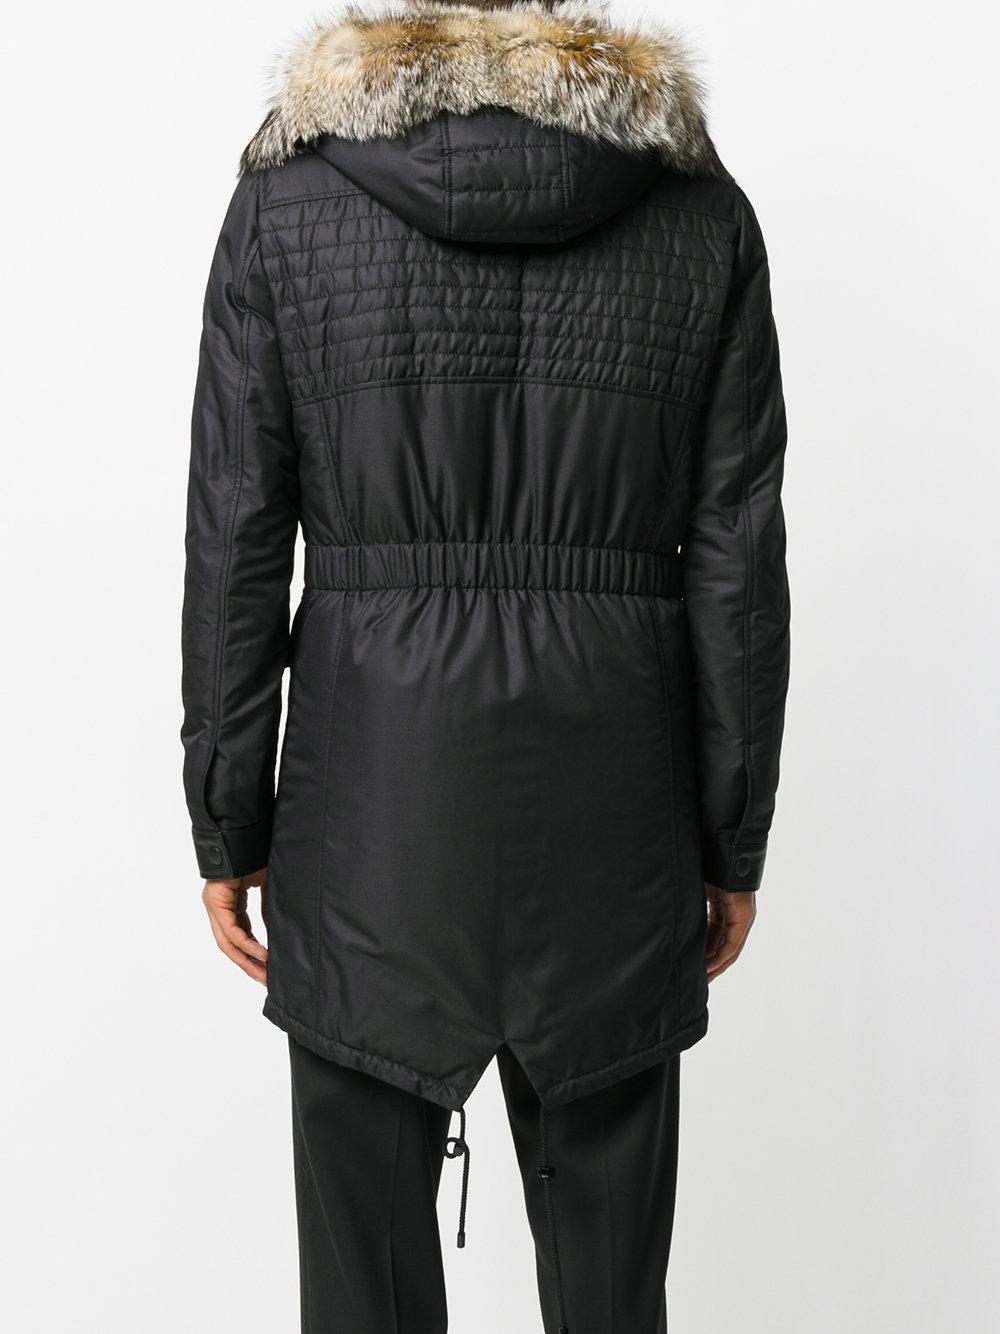 Philipp Plein Infinity Parka Coat in Black for Men | Lyst